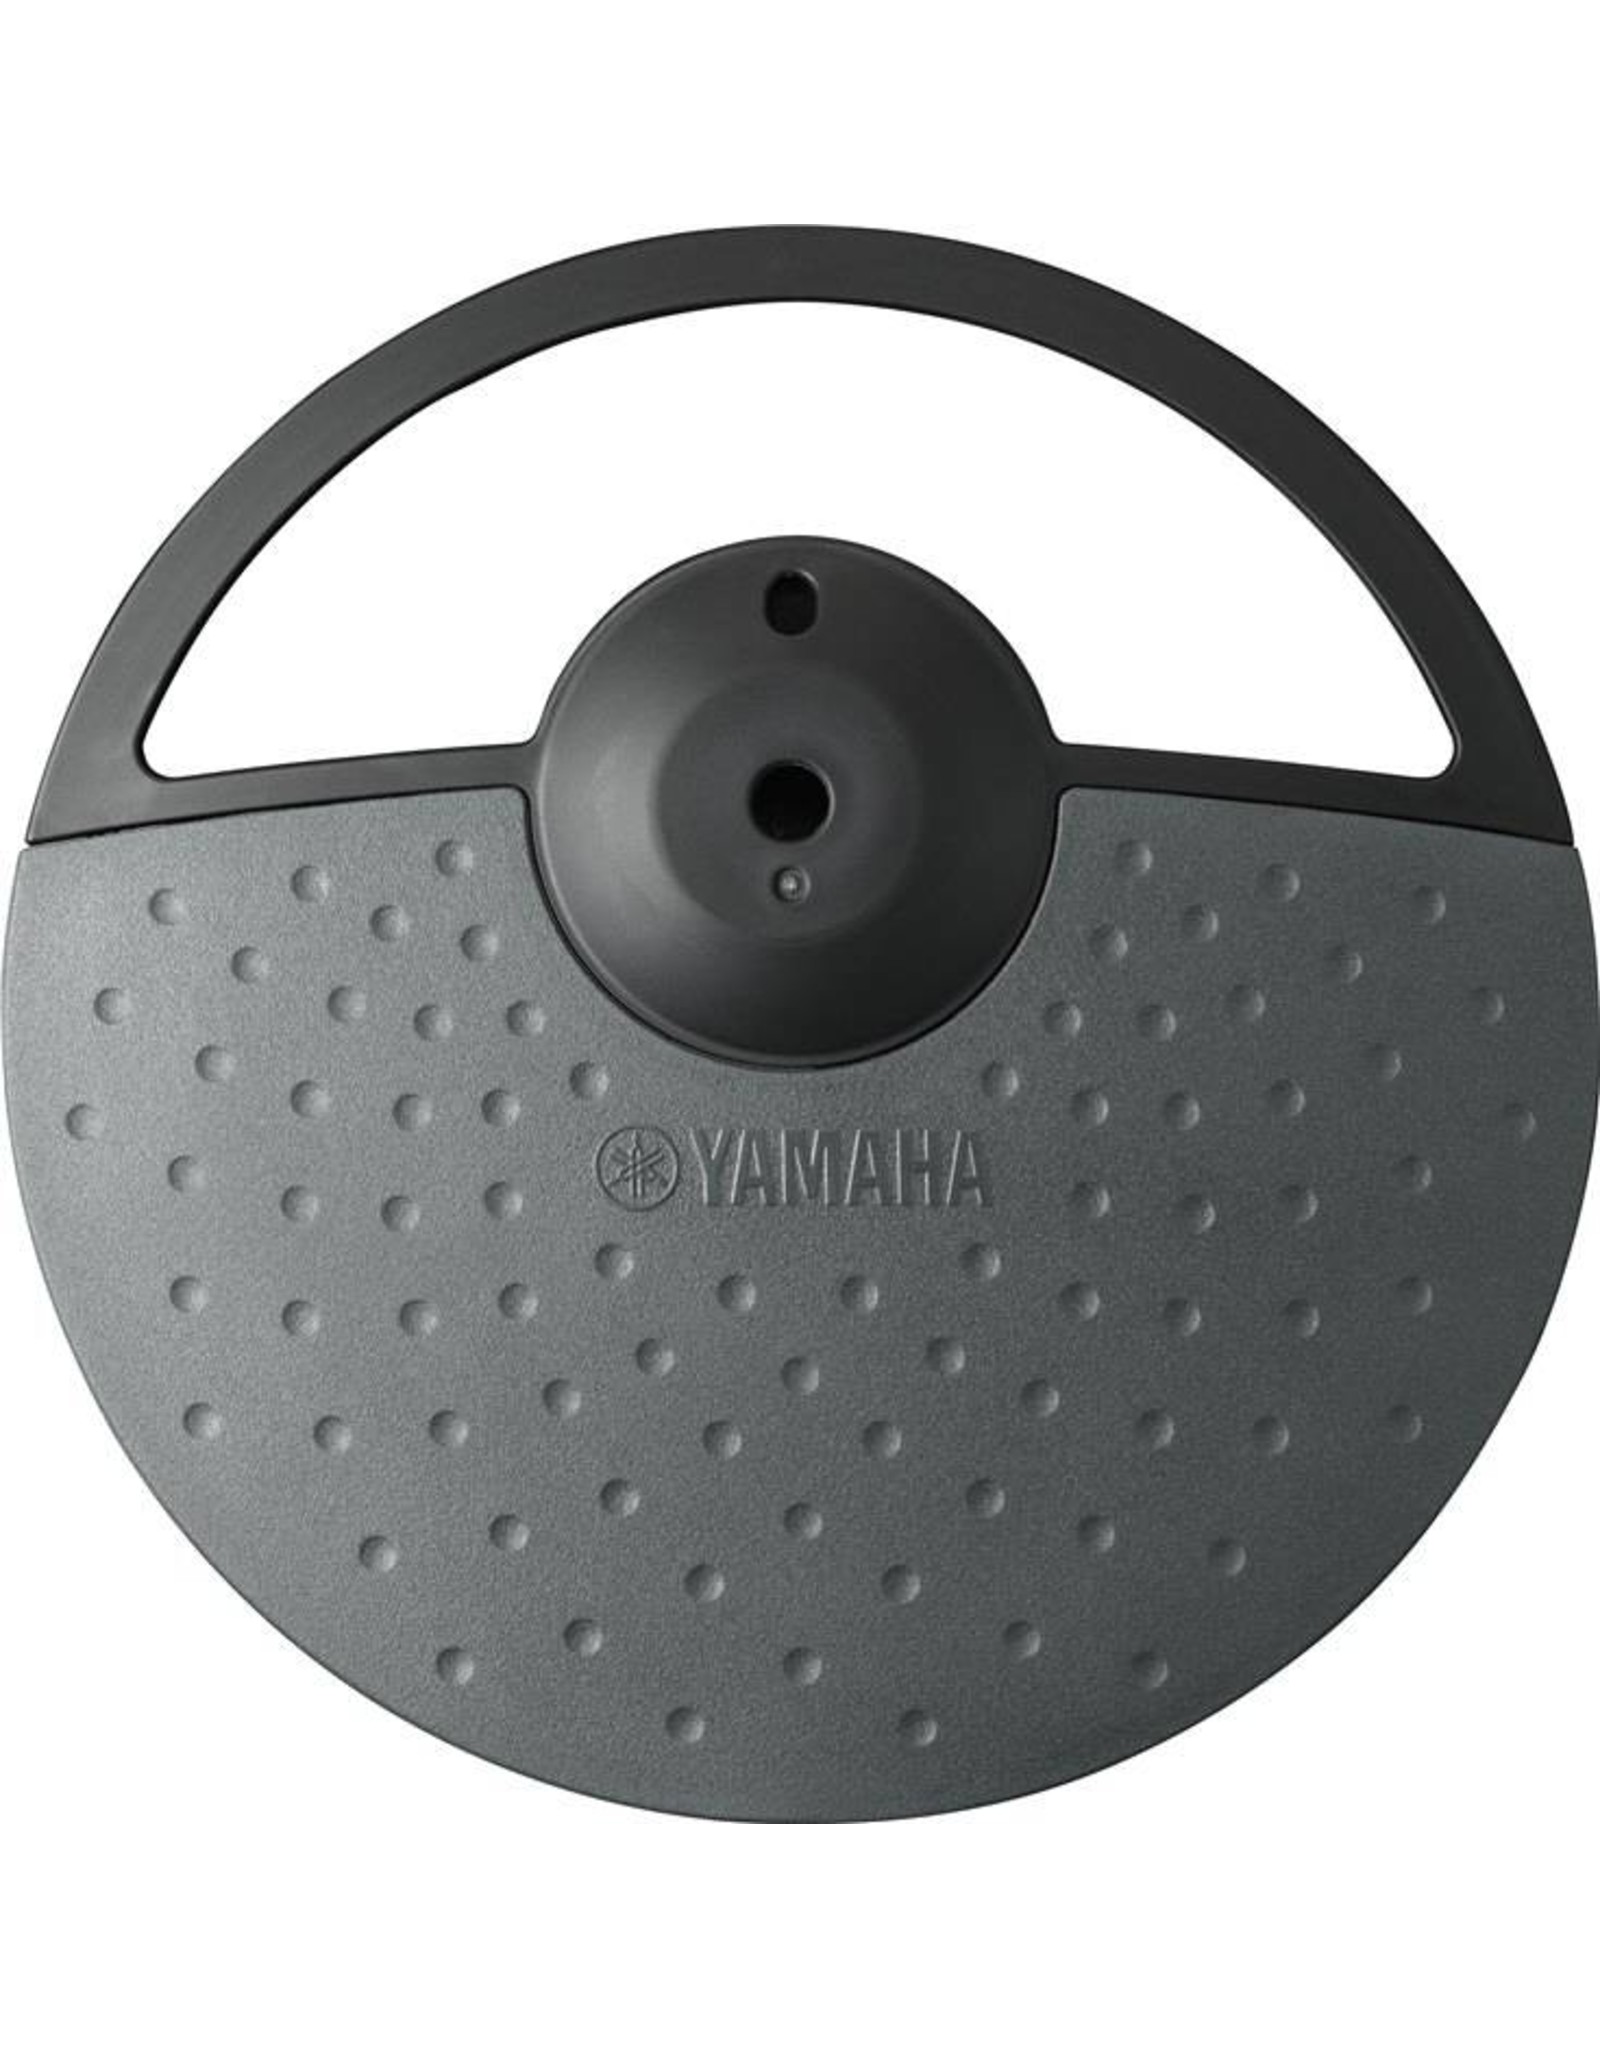 Yamaha PCY-90AT-Set cymbalpad set for DTX400 series